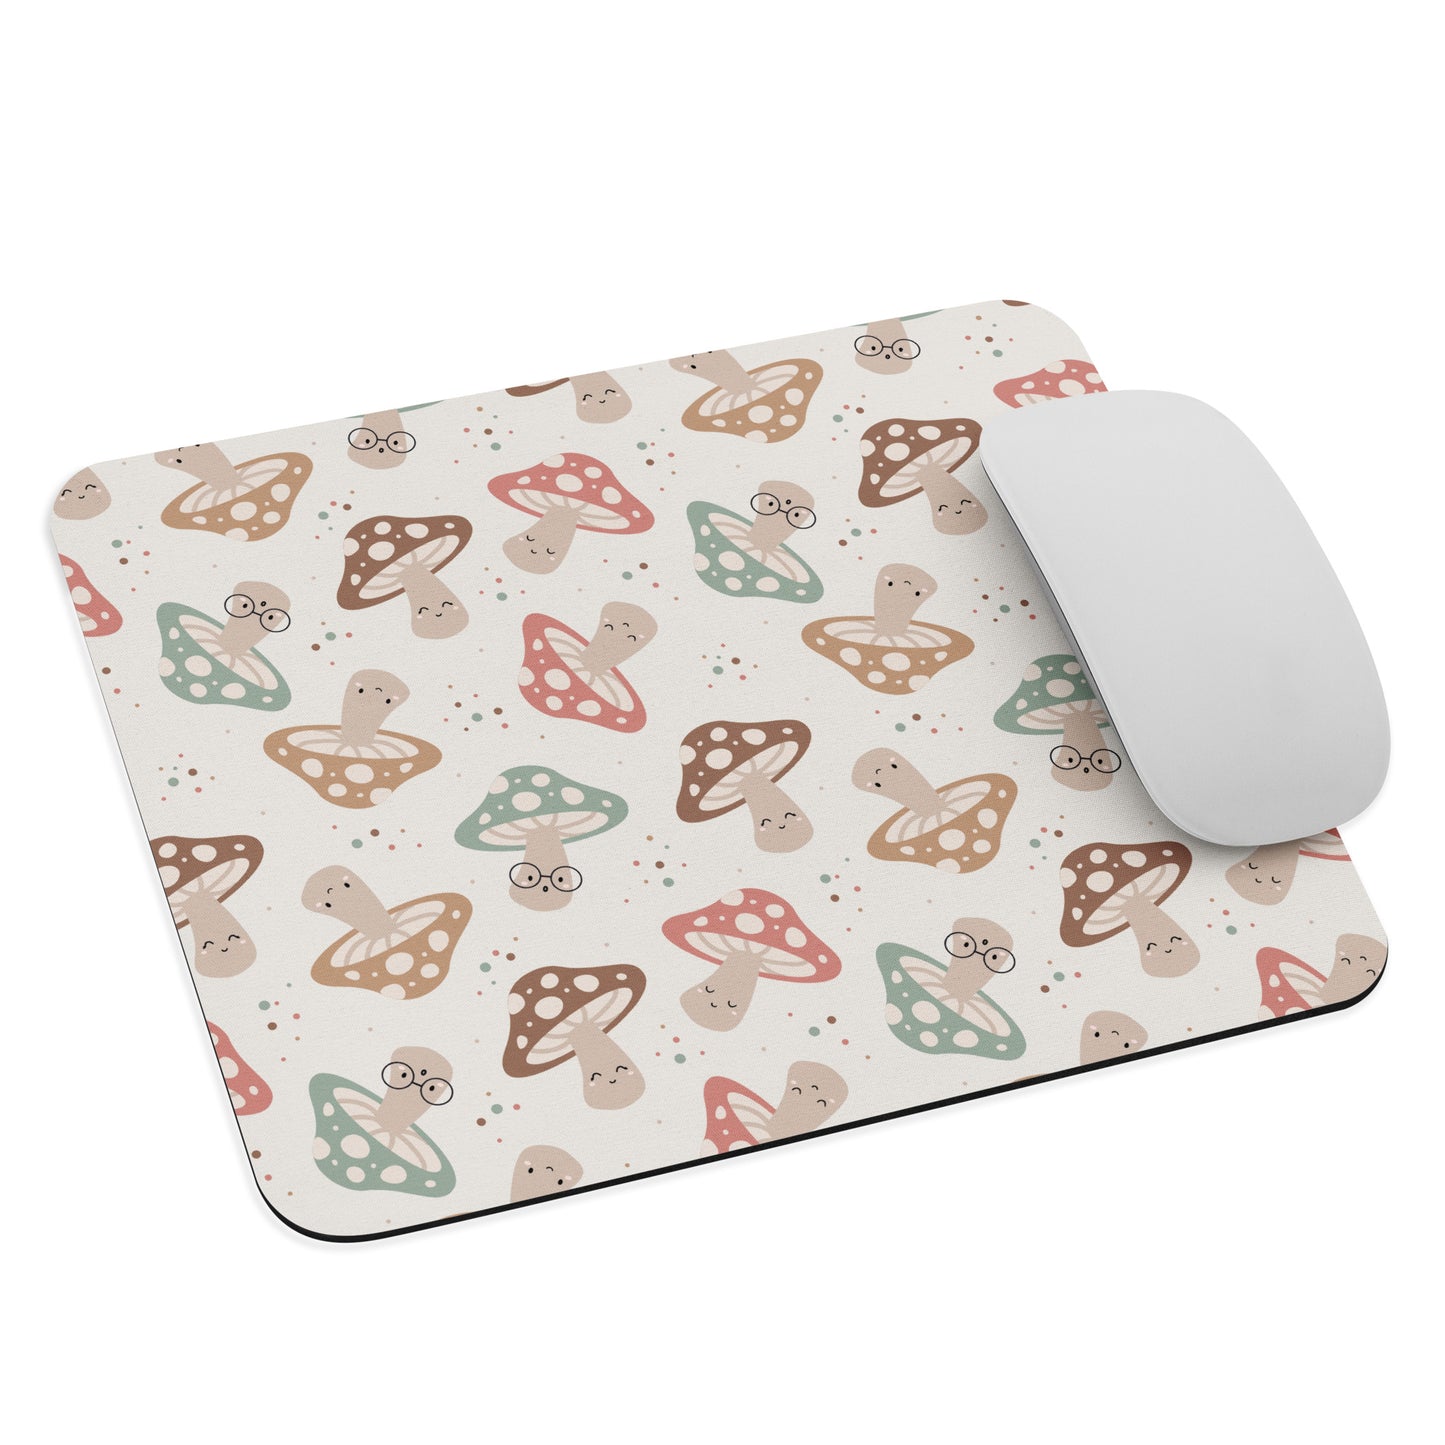 Mushroom Cute Kawaii Gaming Mouse pad, Computer Keyboard Office Accessories, Cute Office Decor